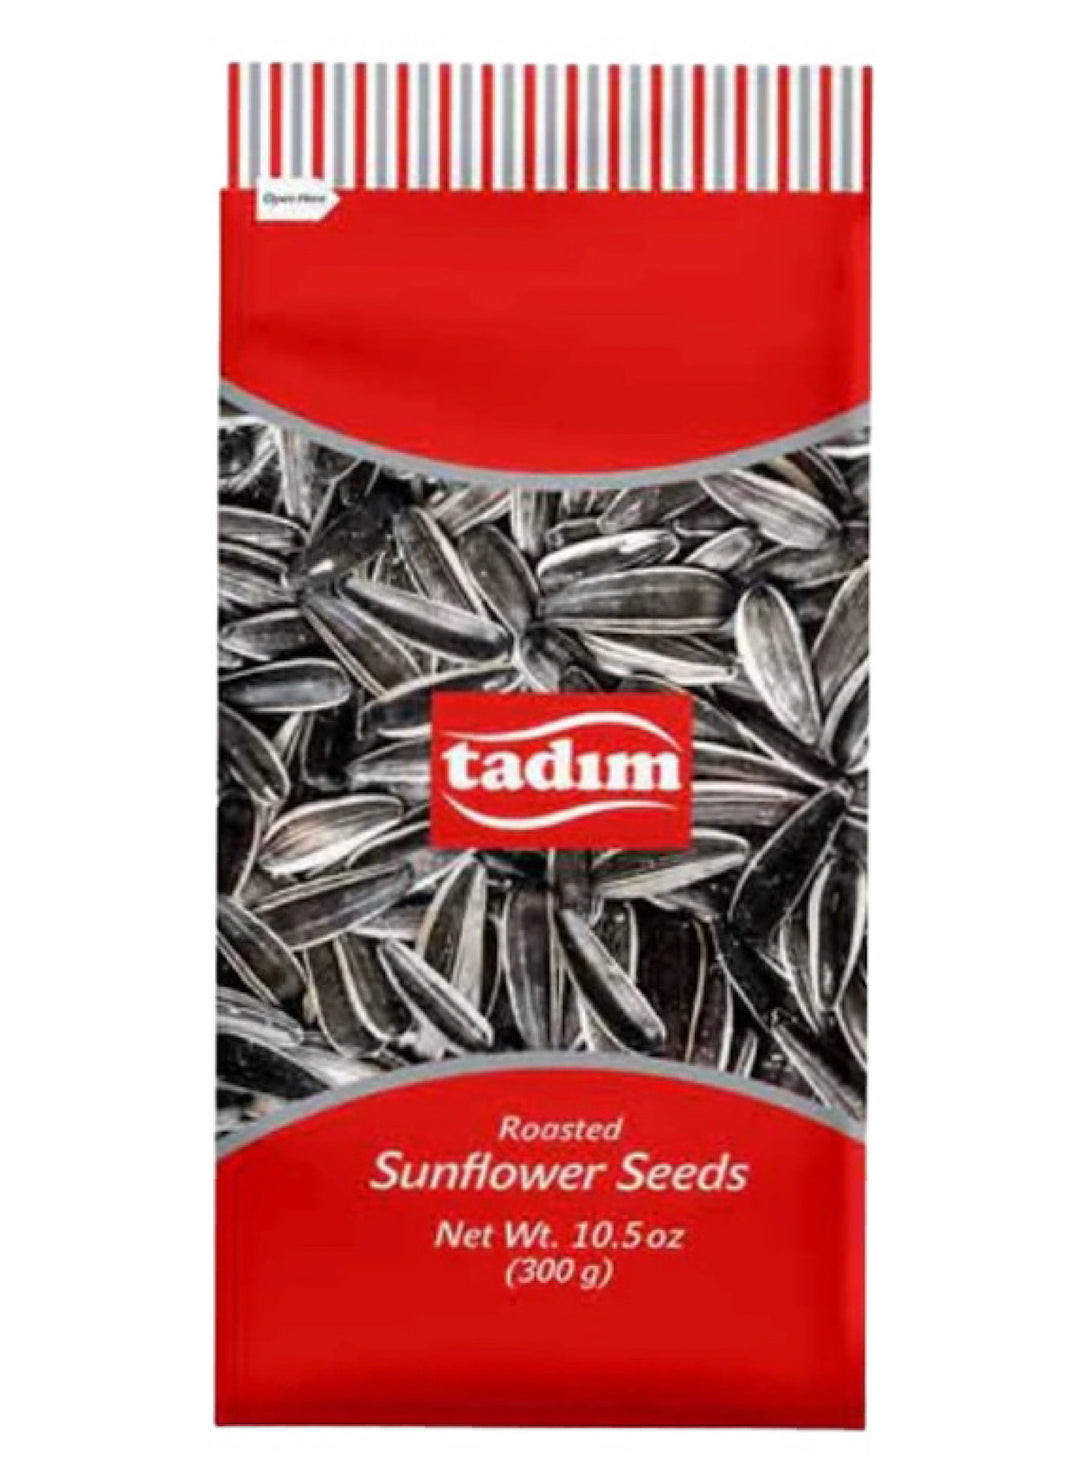 Sunflower Seeds Roasted and Salted - Tadim - 300g